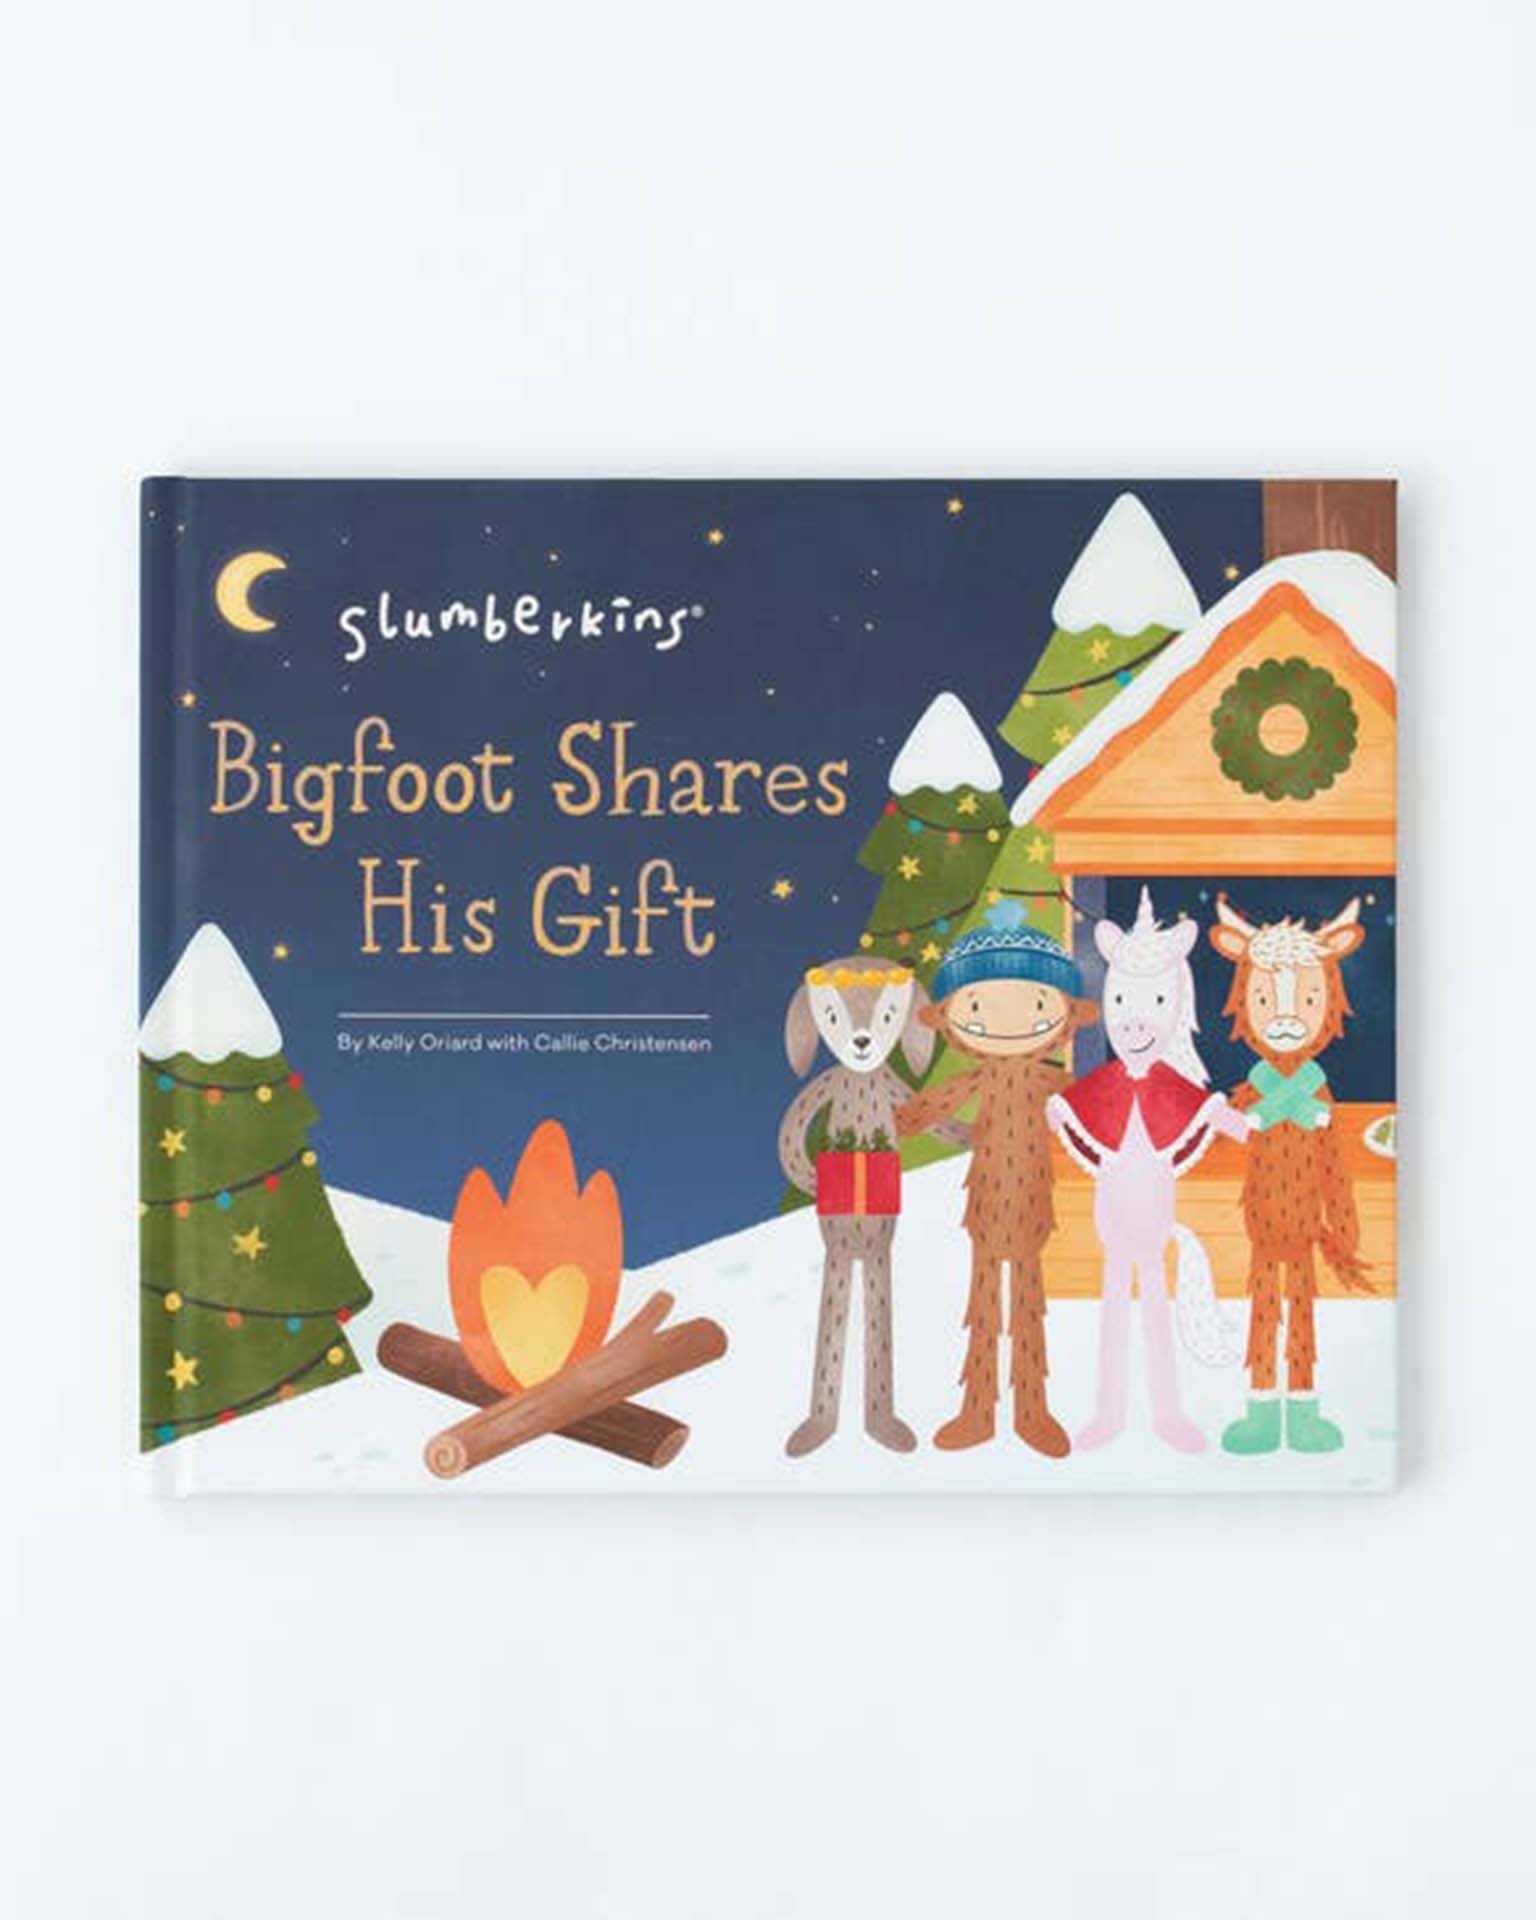 Little slumberkins play bigfoot shares his gift holiday hardcover book